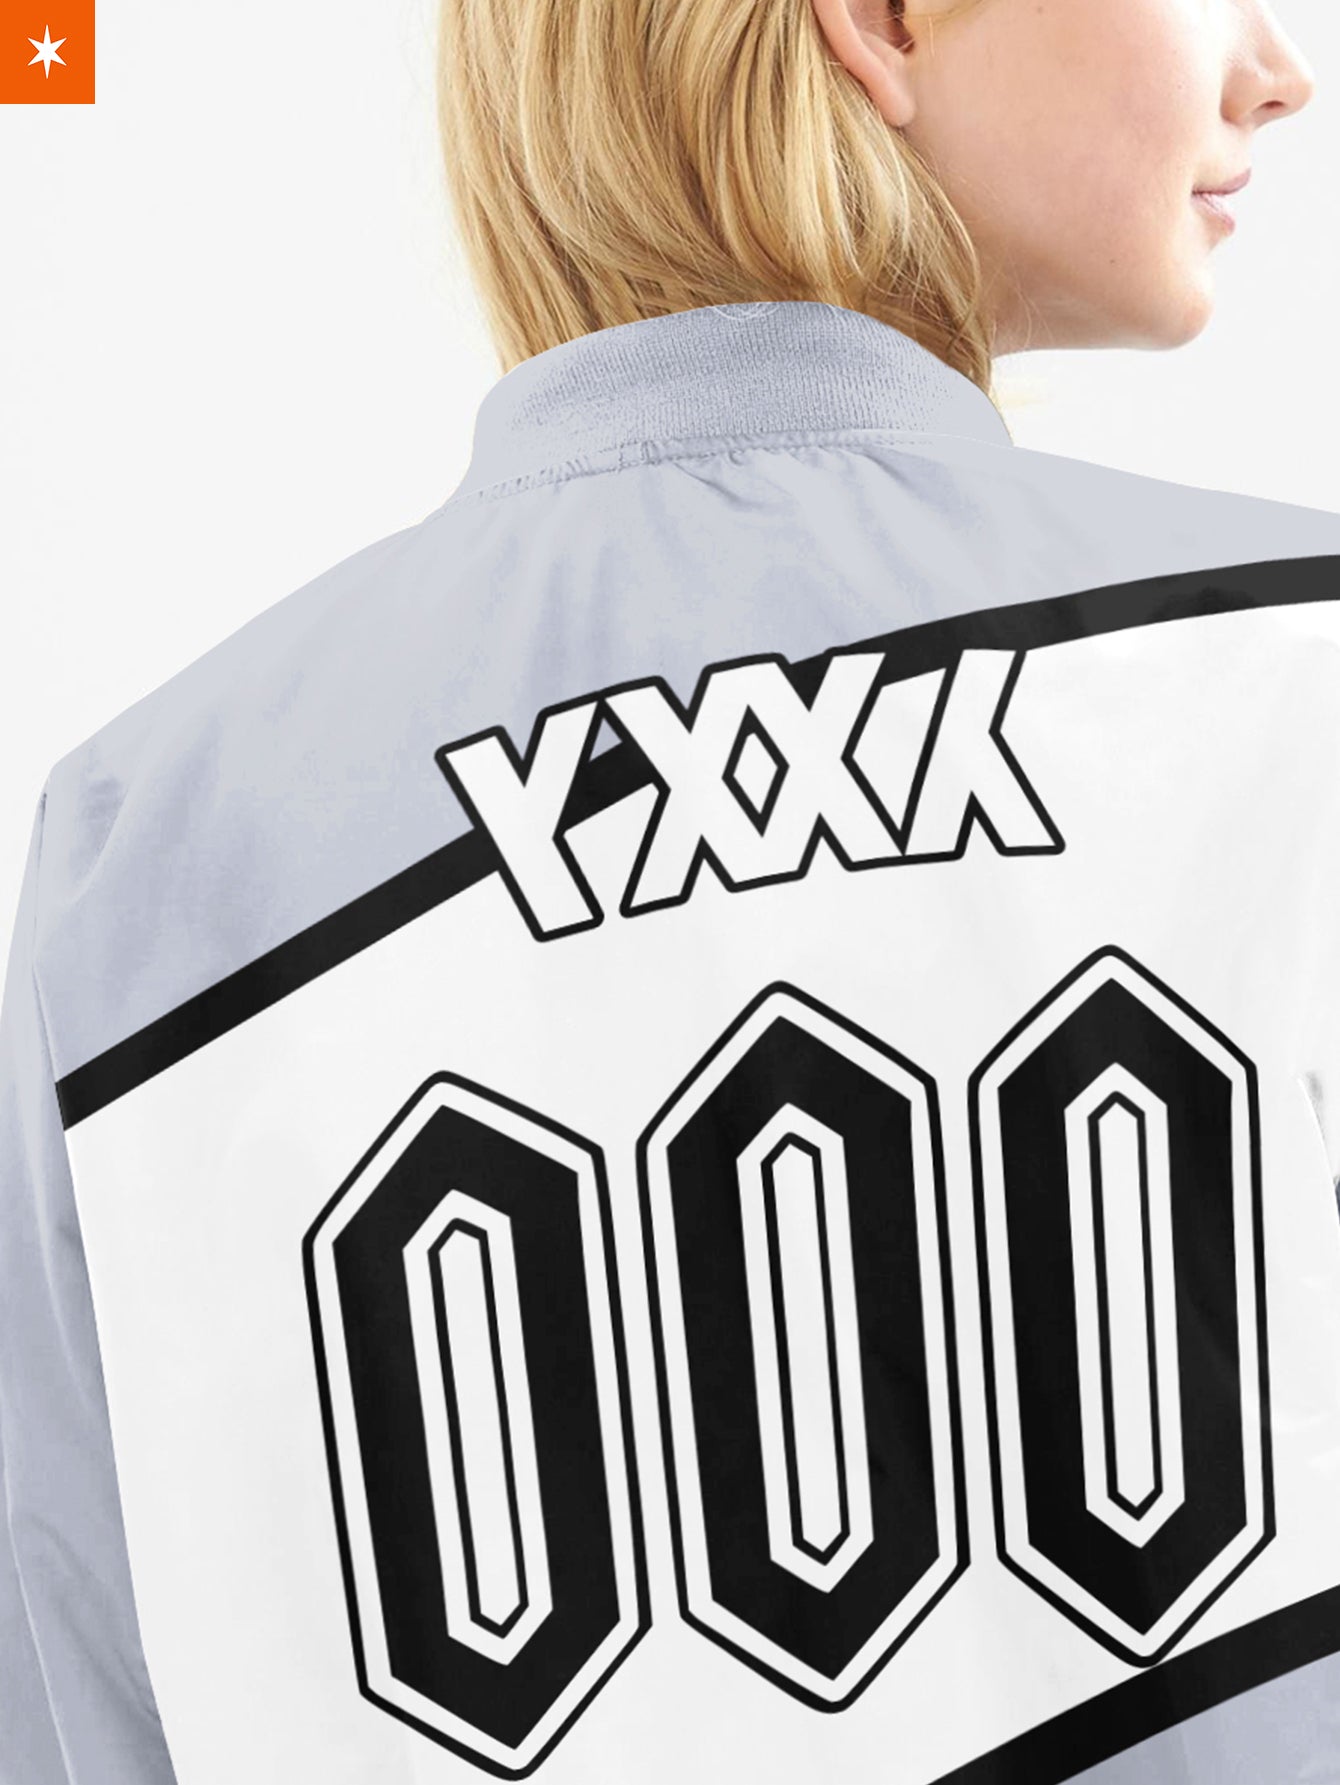 Fandomaniax - [Buy 1 Get 1 SALE] Personalized Poke Rock Uniform Bomber Jacket